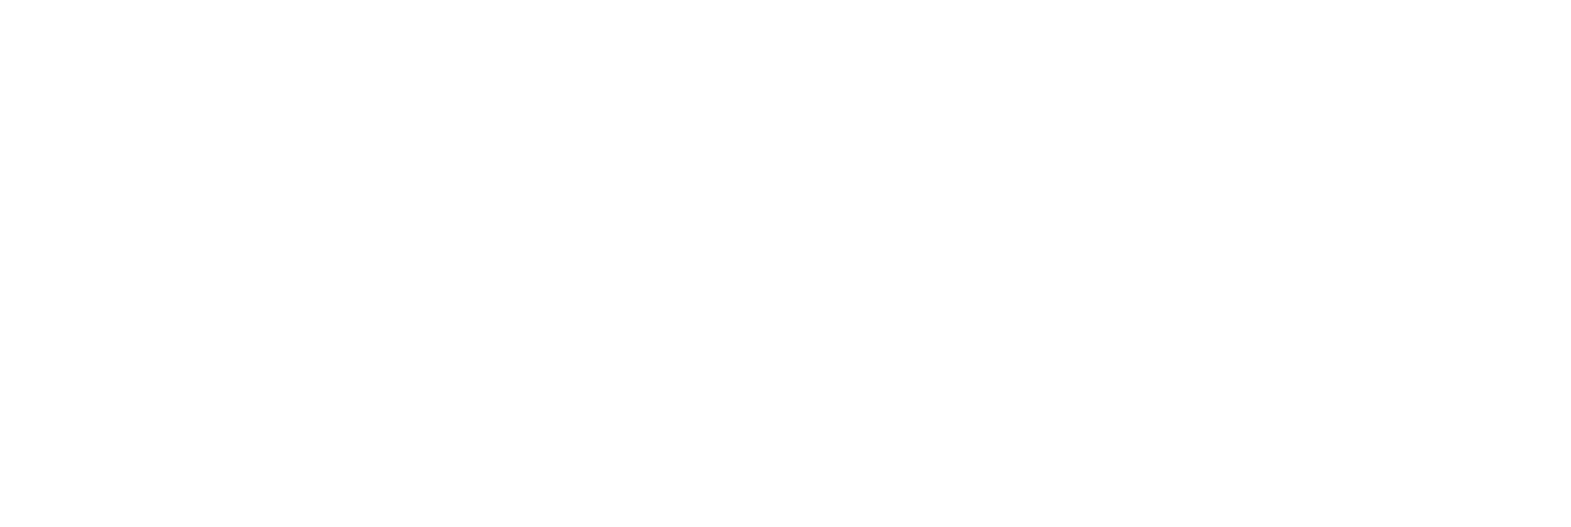 pk for school